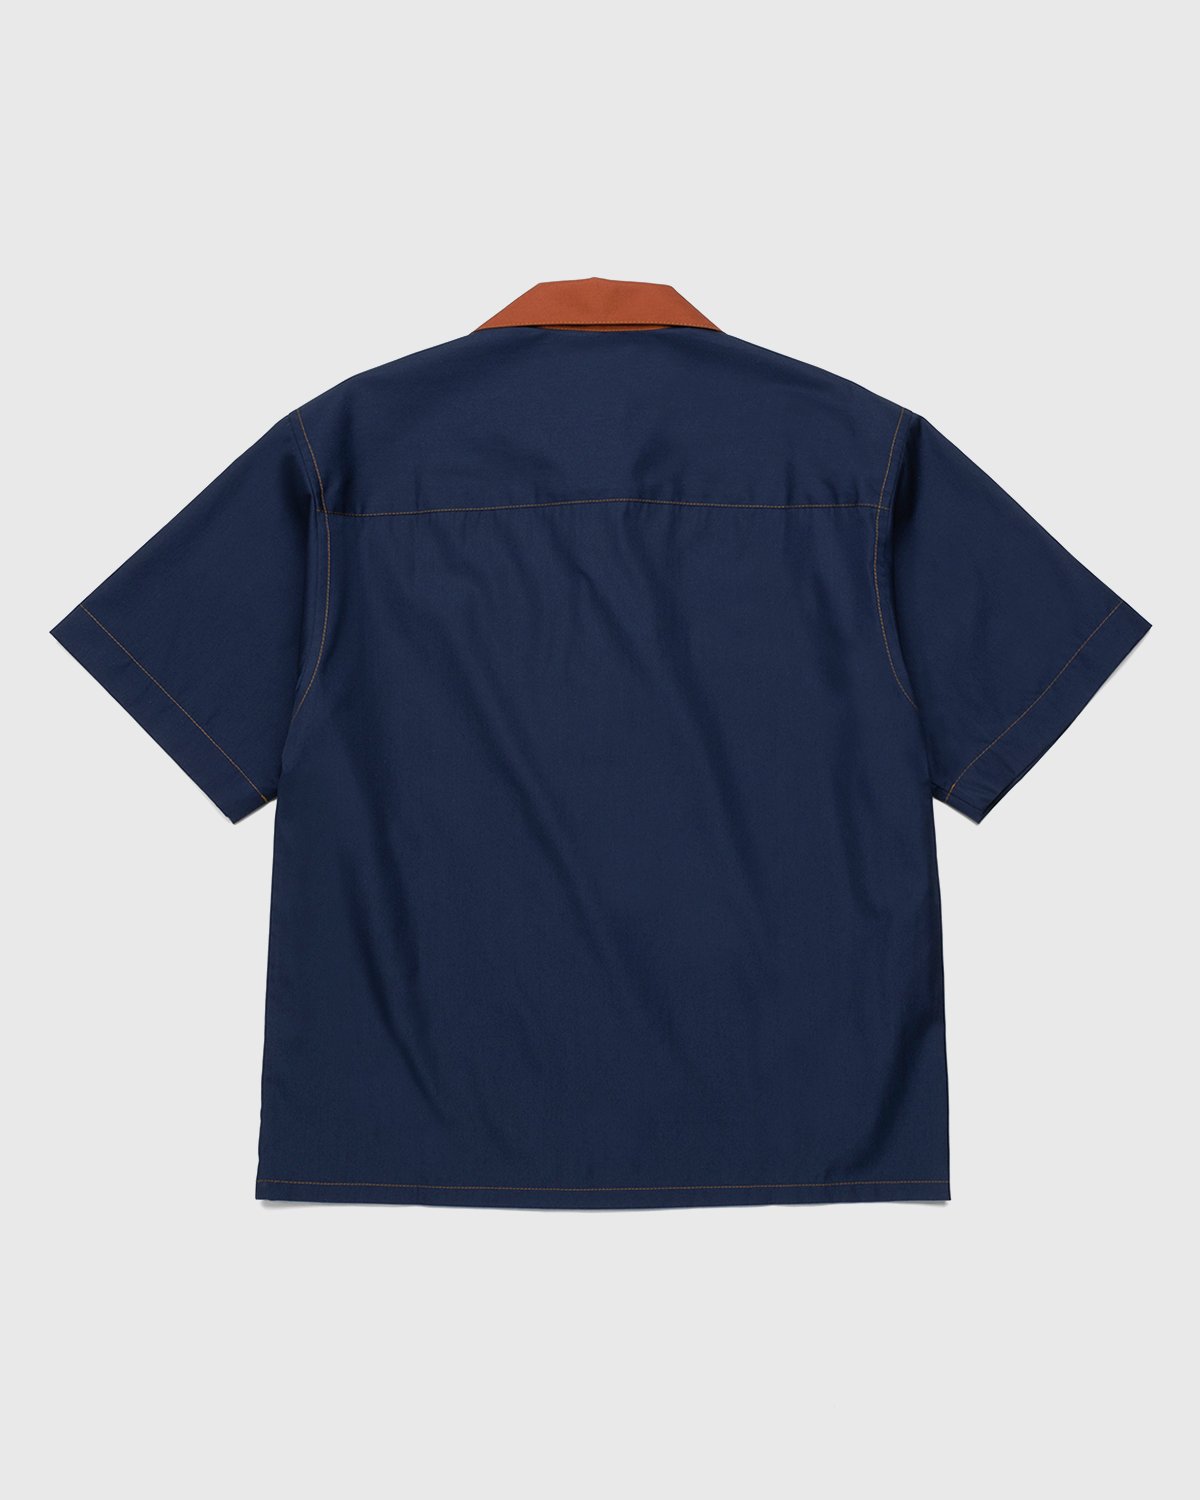 Marni - Logo Bowling Shirt Navy - Clothing - Blue - Image 2